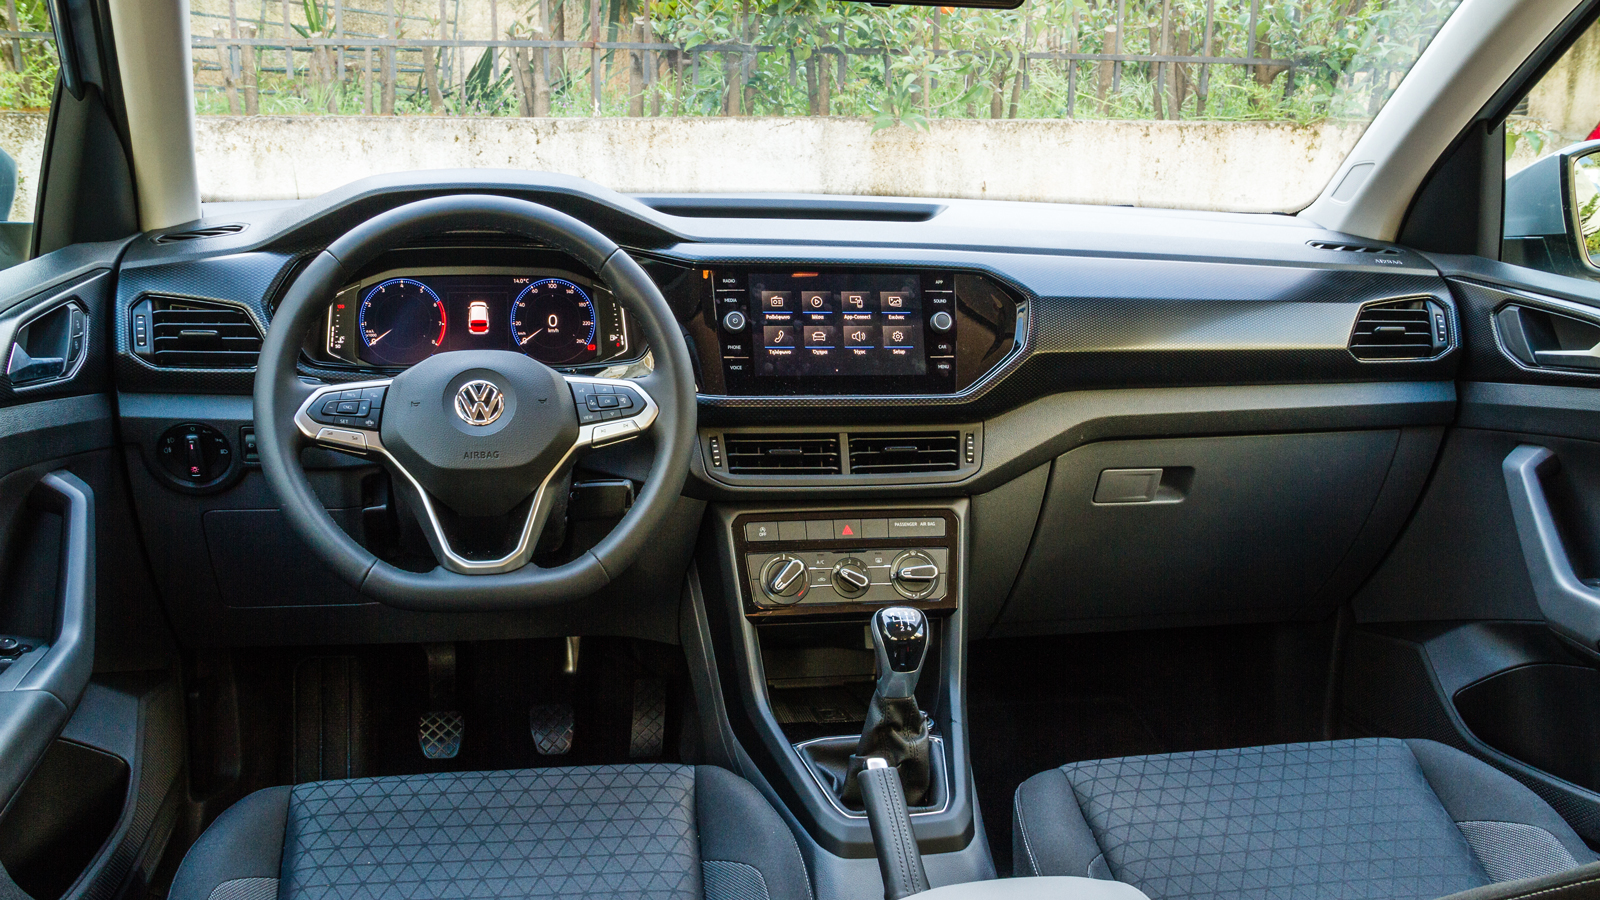 Peugeot 2008 VS VW T-Roc: Ποιο ξεχωρίζει σε εξοπλισμό ασφαλείας και άνεσης;